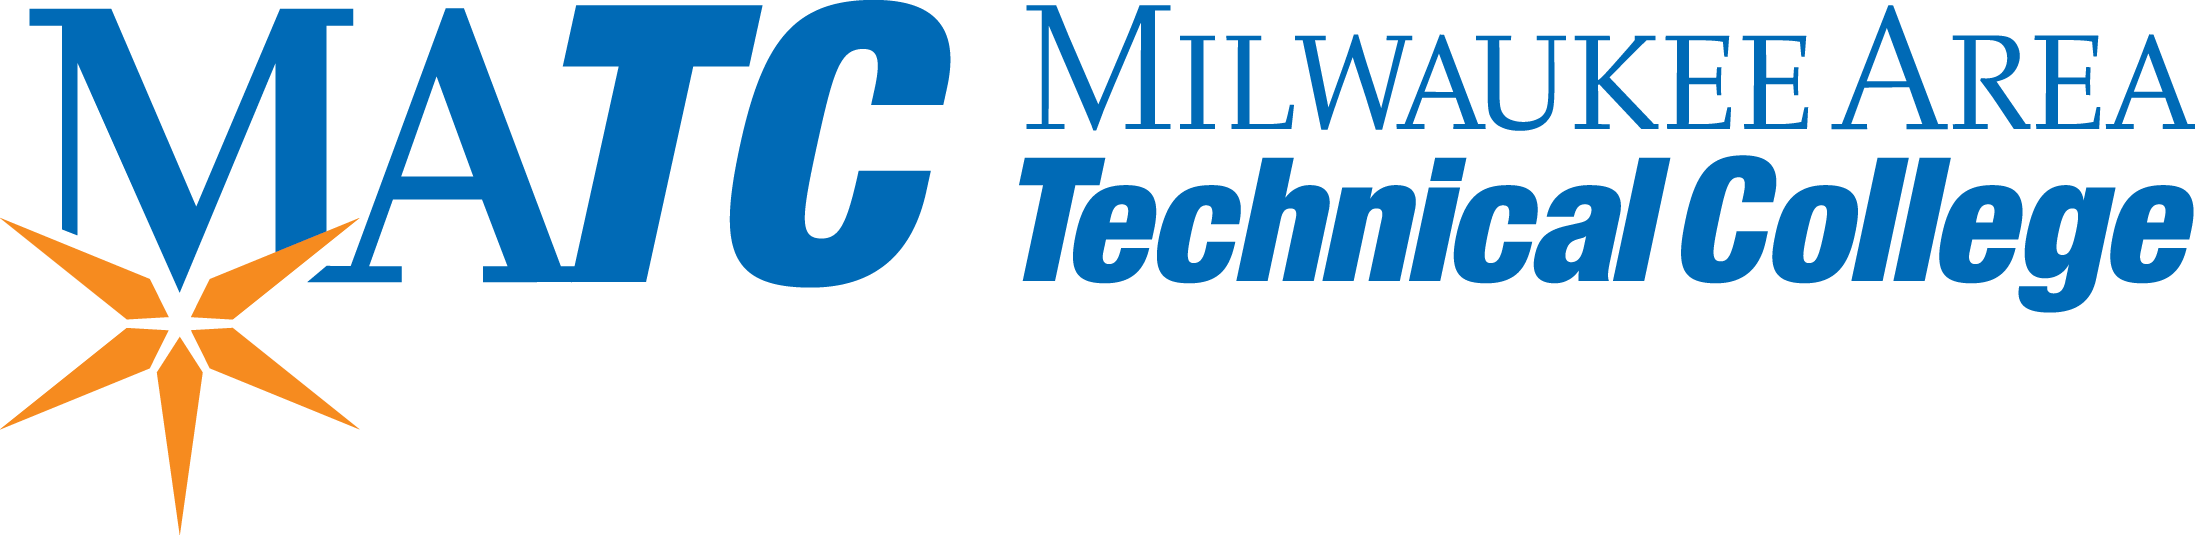 MilwaukeeAreaTechnicalCollege_MATC_Fifth-logo_NOtagline_FNL